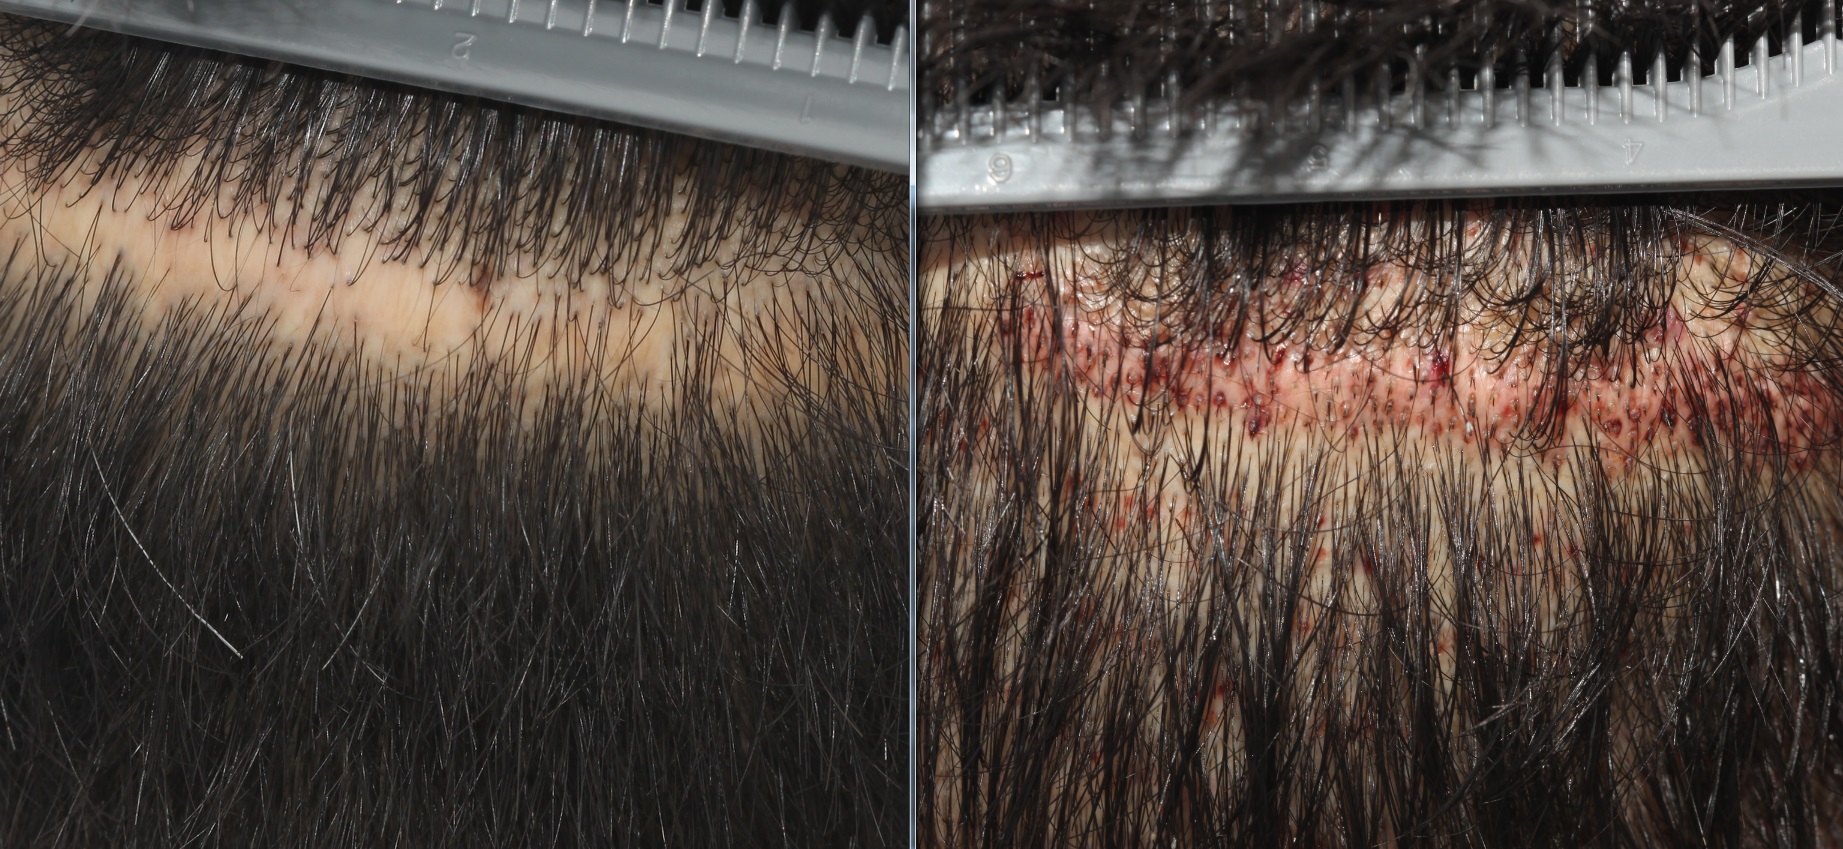 FUE hair transplant in scar